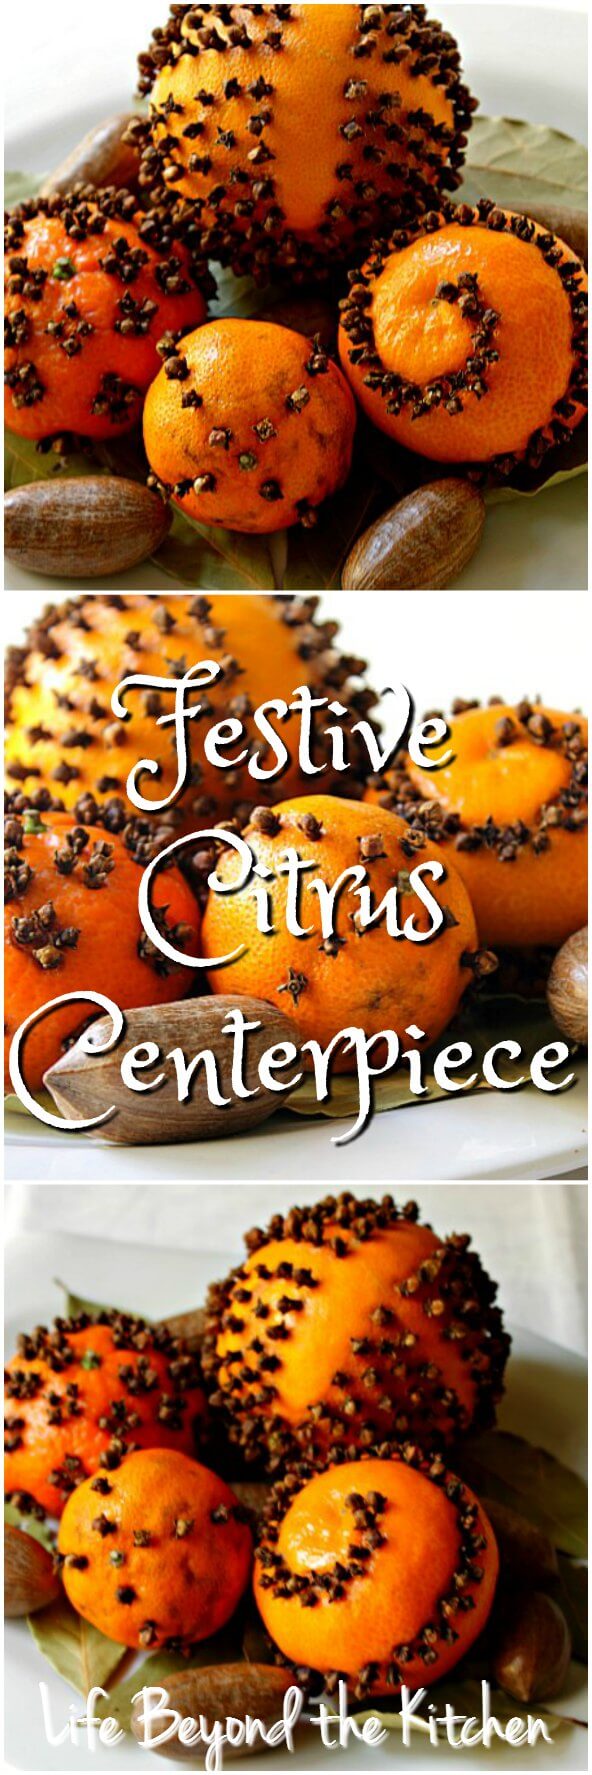 Festive Citrus Centerpiece ~ Creative Craft Bloggers Challenge #ccbg ~ Life Beyond the Kitchen